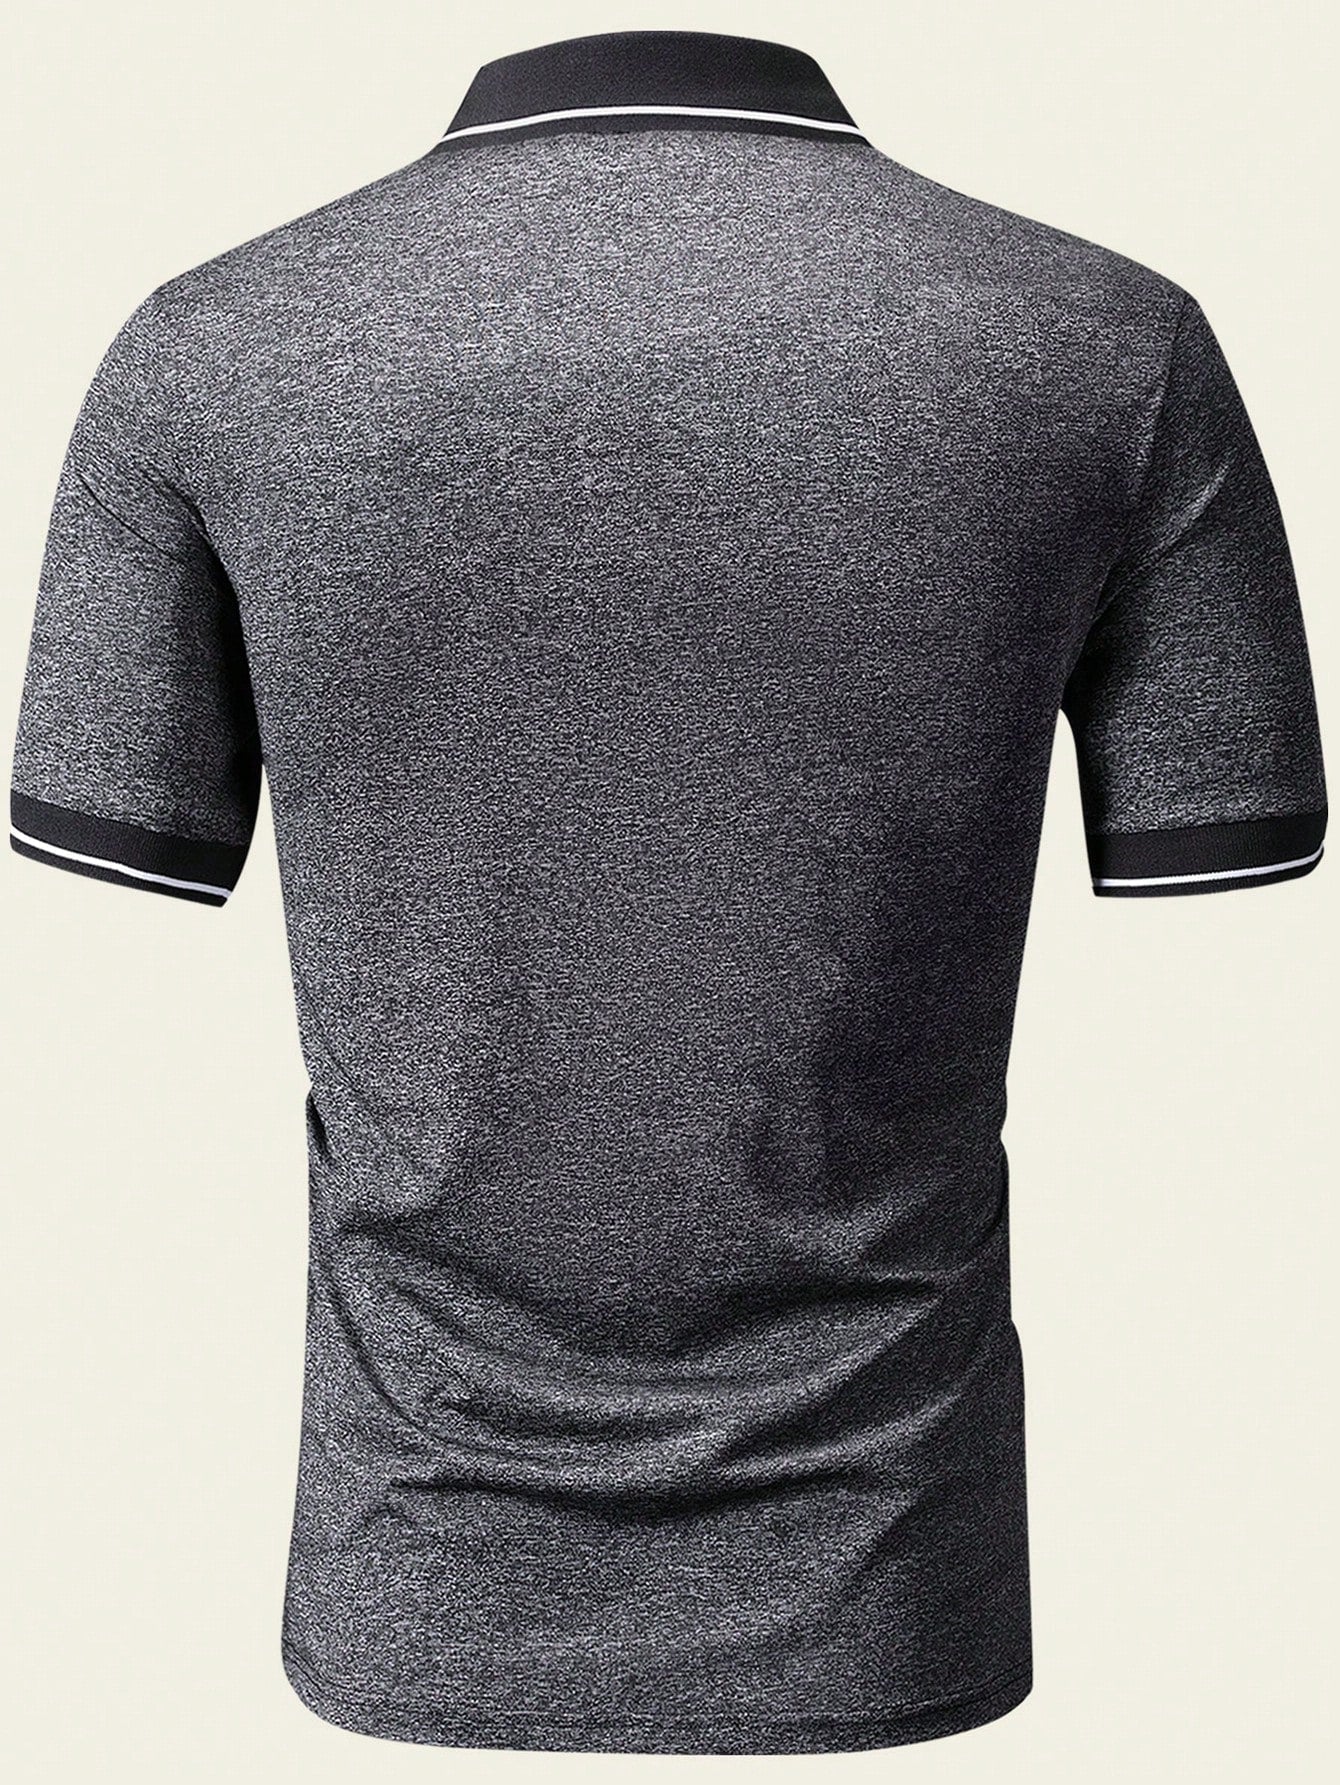 Men's Short Sleeve Polo Shirt. Outdoor Casual Sportswear Top